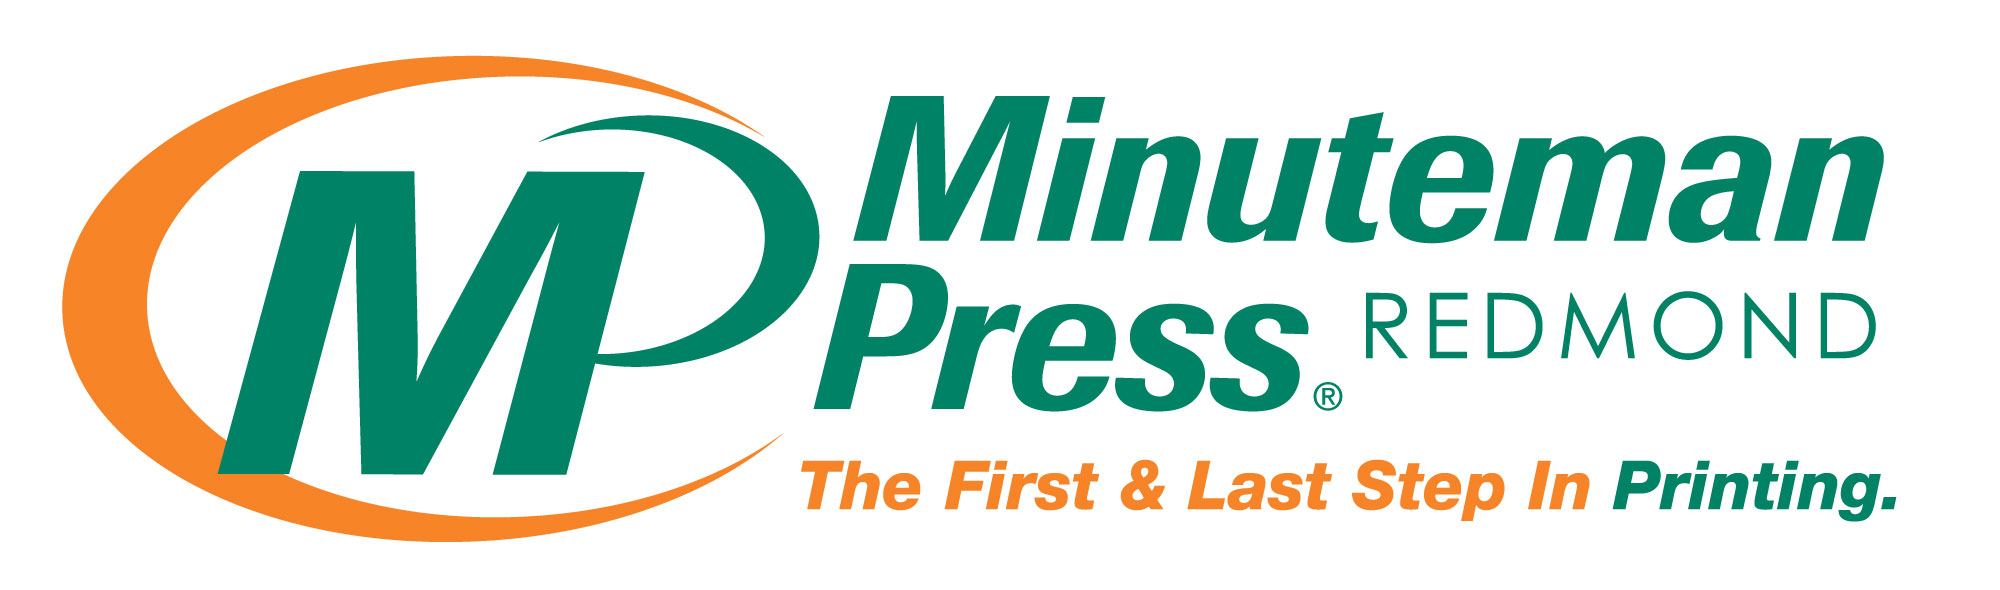 logo_minuteman_press